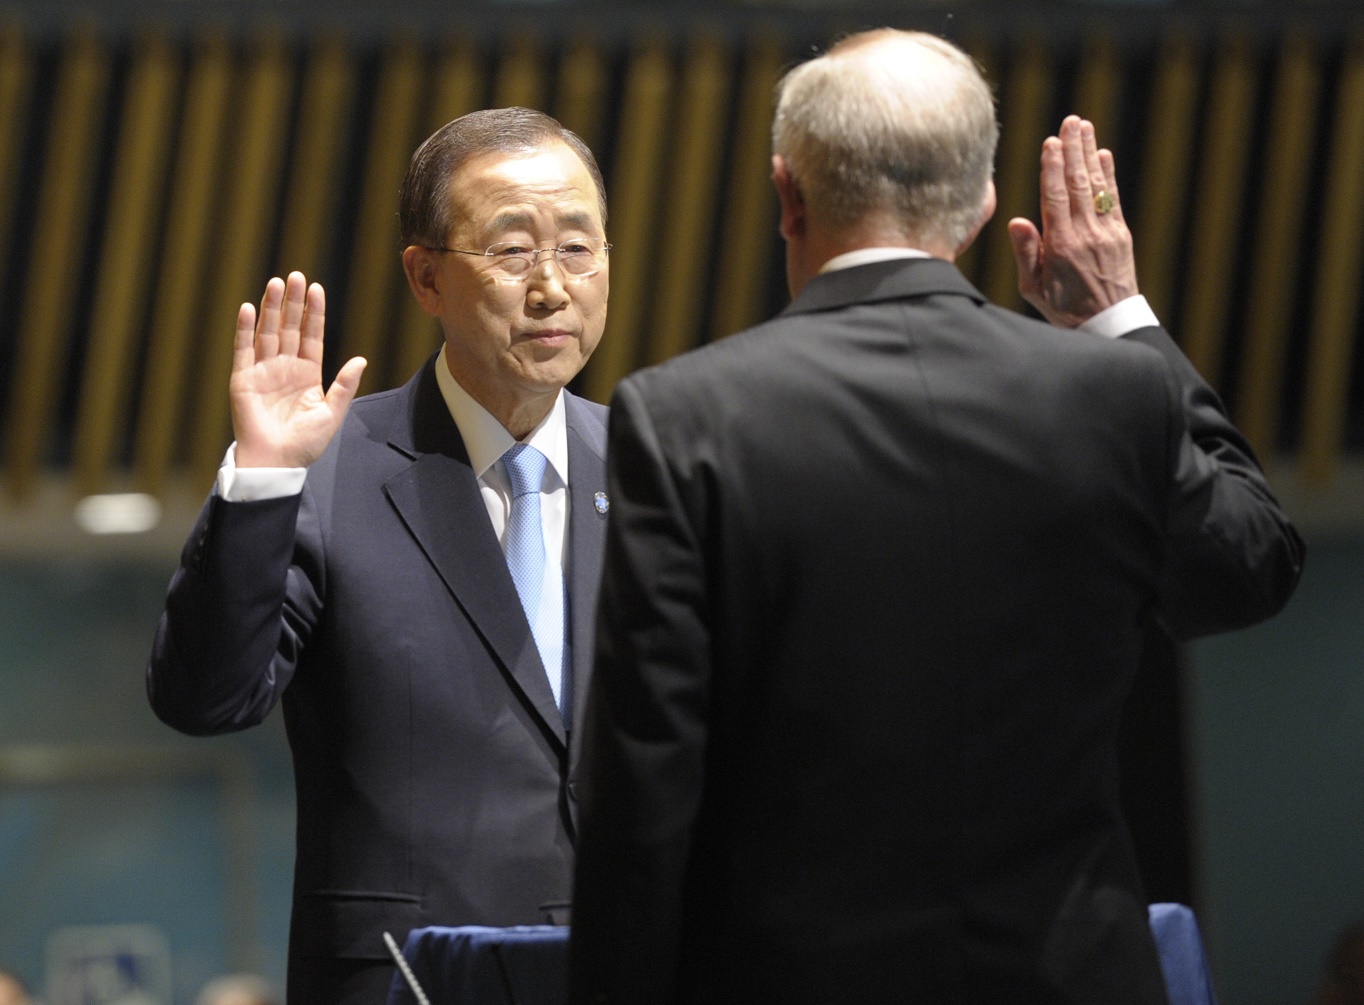 Choosing a new UN Secretary-General who will champion human rights